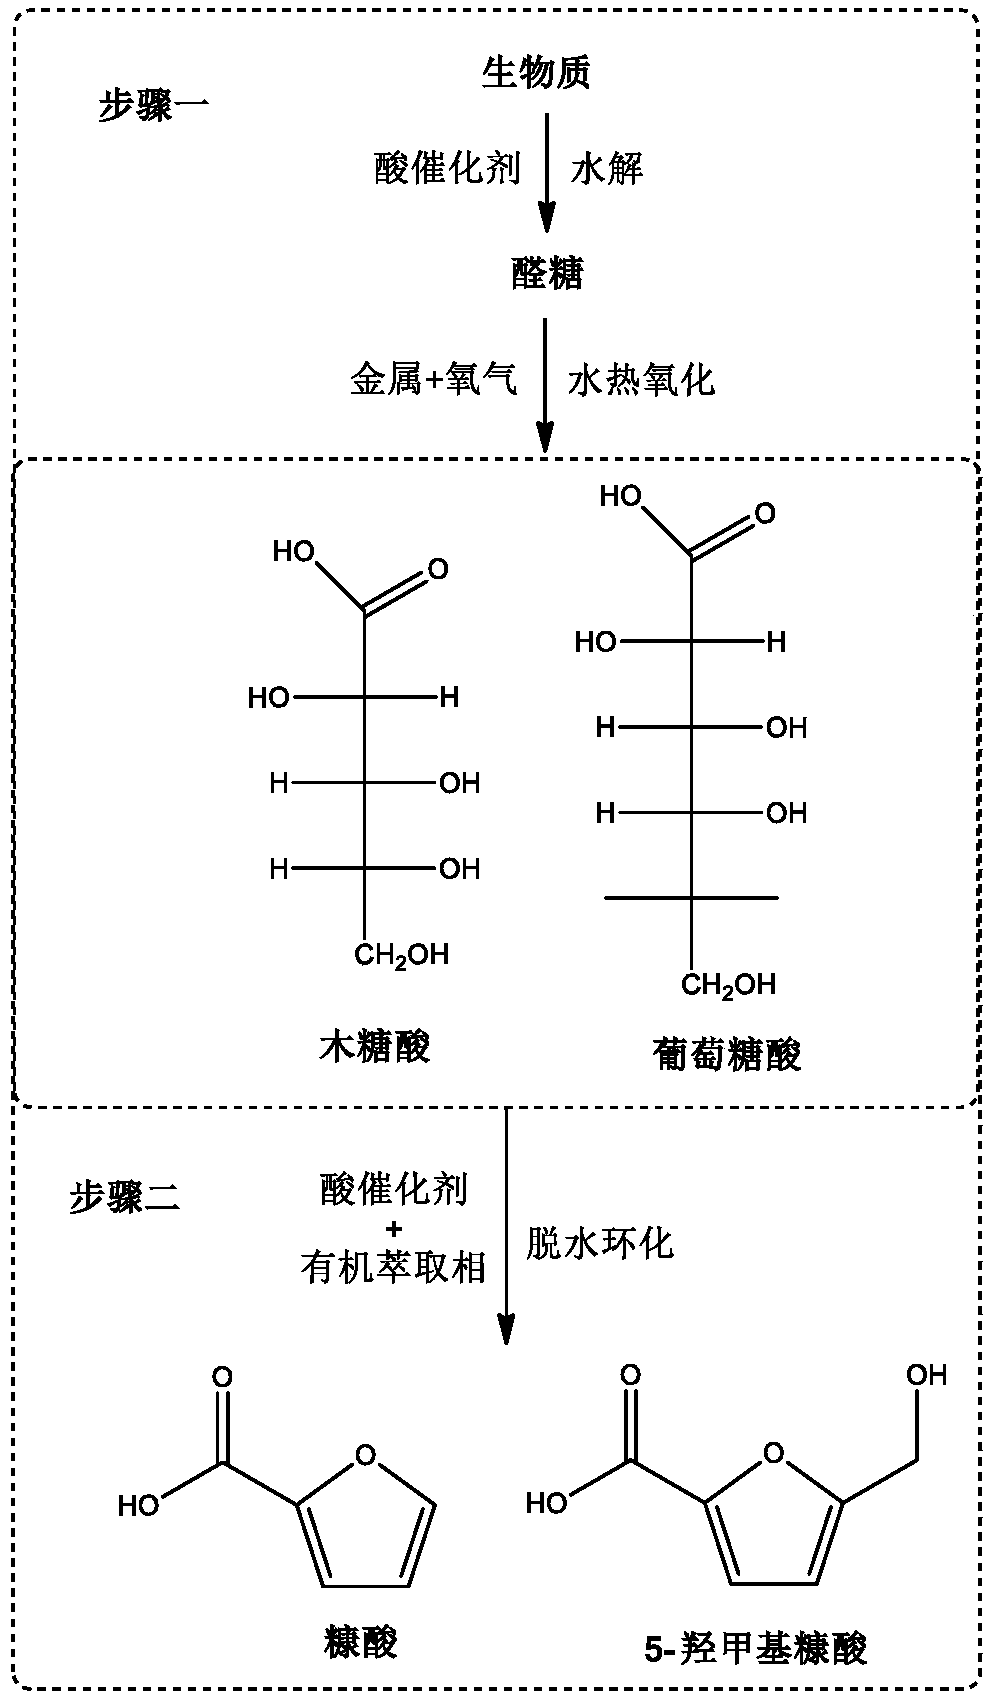 Method for preparing furoic acid and 5-hydroxymethyl furoic acid by biomasses